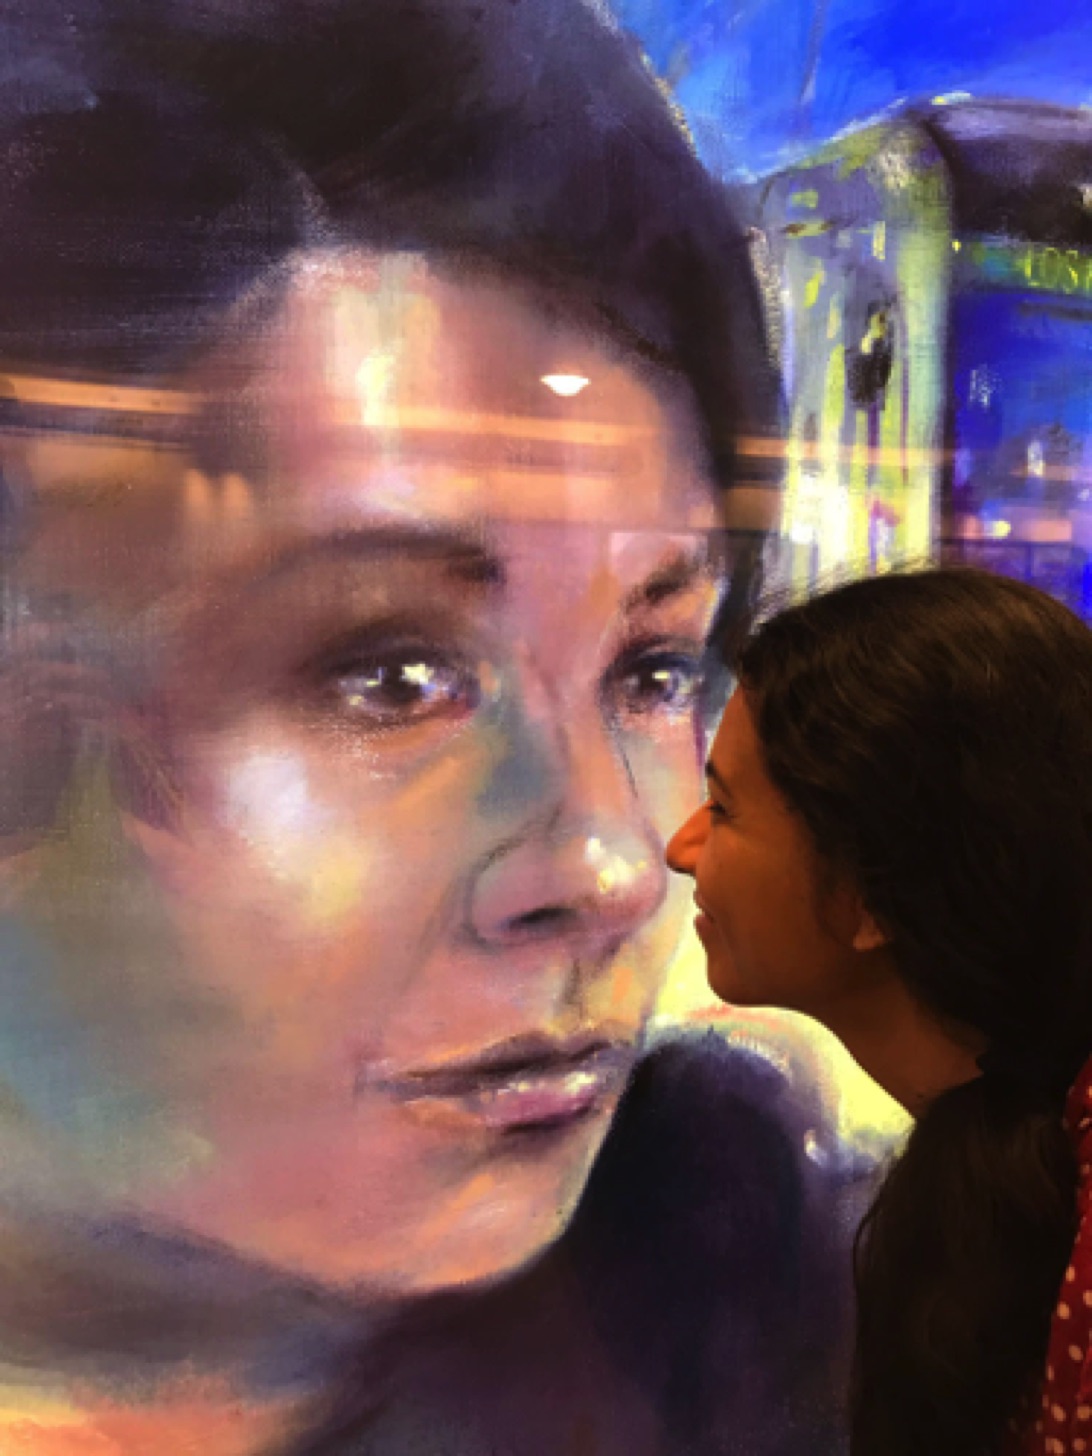 Frida Cano Meets Frida Cano
On exhibit in 𝙒𝙚 𝘼𝙧𝙚… 𝙋𝙤𝙧𝙩𝙧𝙖𝙞𝙩𝙨 𝙤𝙛 𝙈𝙚𝙩𝙧𝙤 𝙍𝙞𝙙𝙚𝙧𝙨 𝙗𝙮 𝙇𝙤𝙘𝙖𝙡 𝘼𝙧𝙩𝙞𝙨𝙩𝙨. Union Station, Los Angeles, California